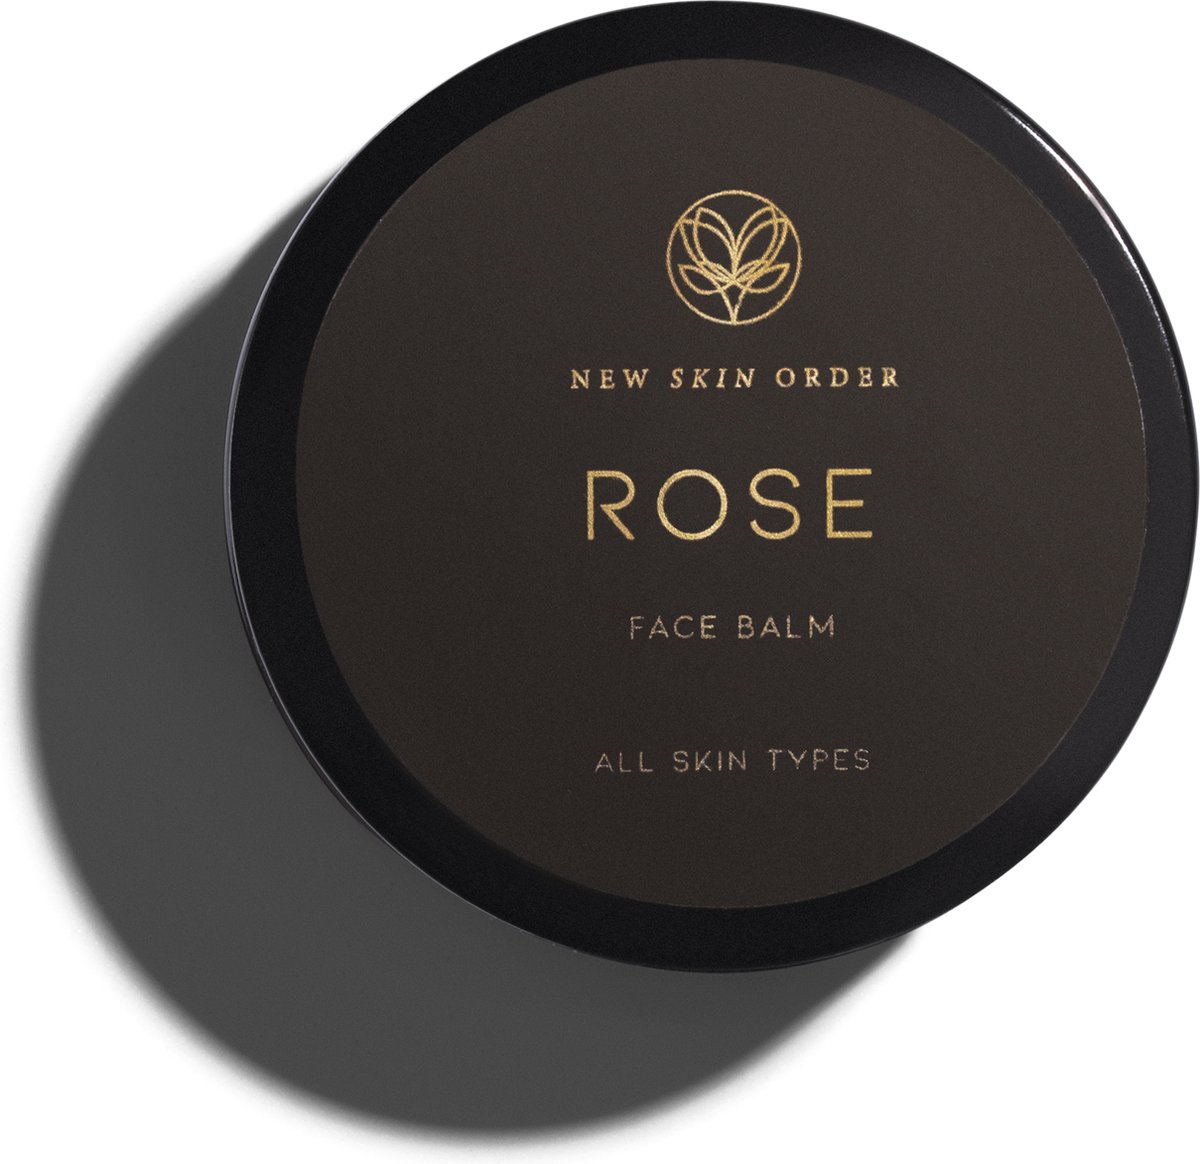 New Skin Order Rose face balm botanical product